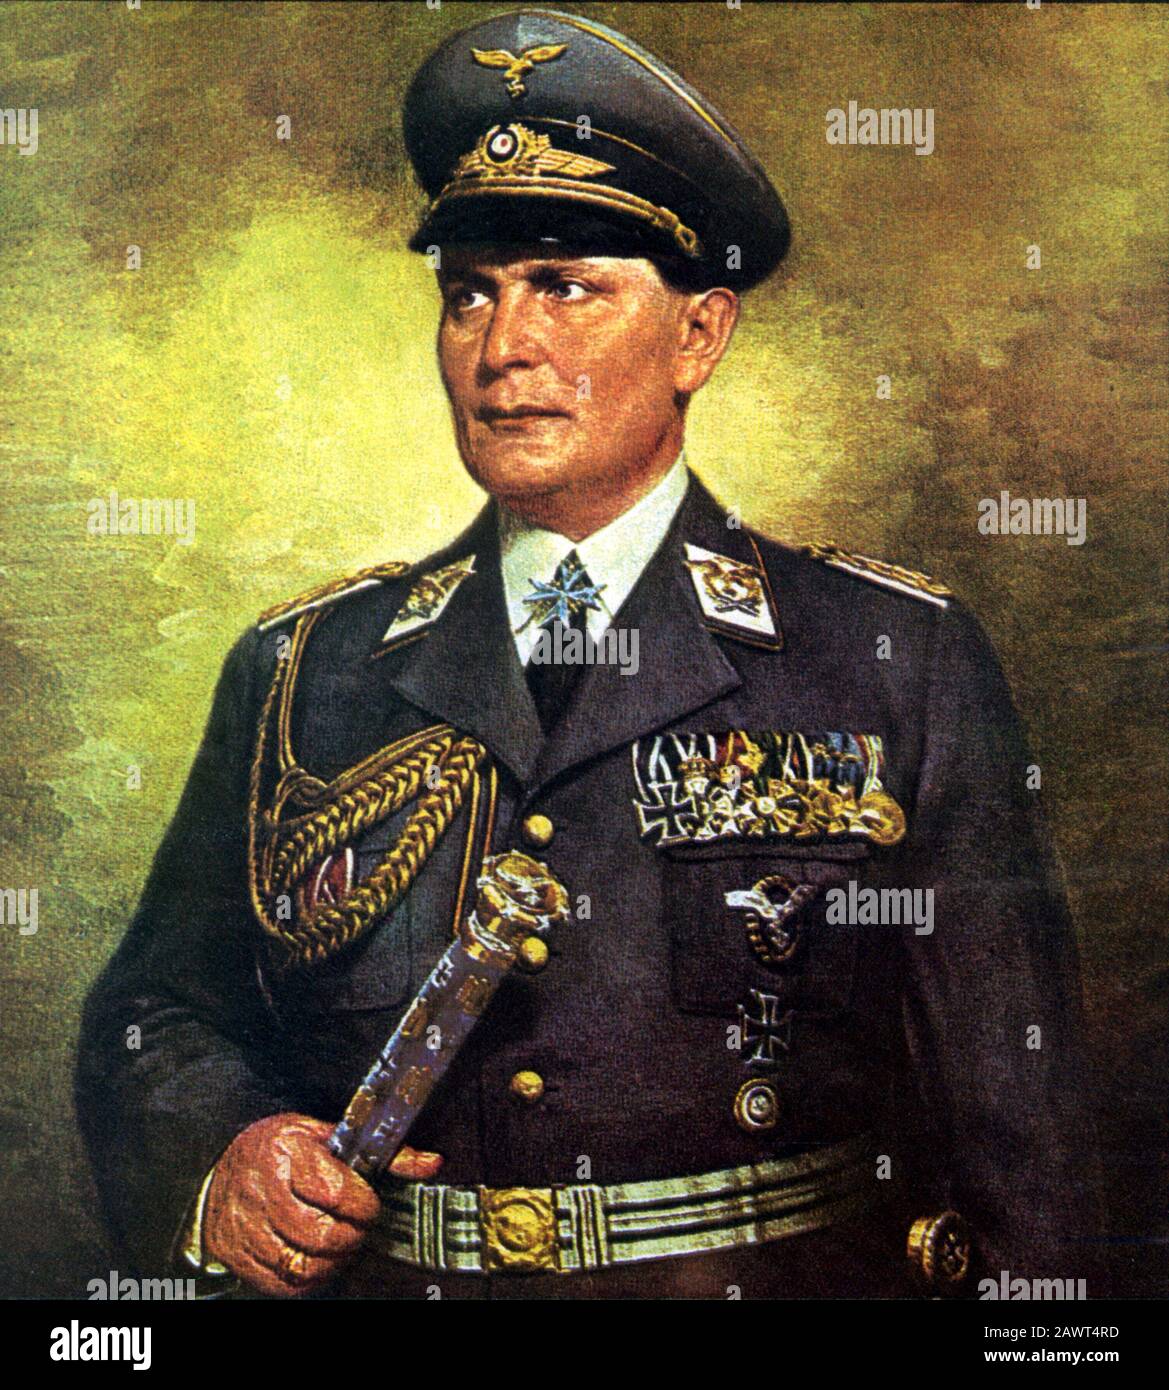 Il tedesco campo Marchall HERMANN GOERING ( 1893 - 1946 ) , comandante di Luftwaffe - NAZISTA - NAZISTA - NAZISTA - NAZISTA - NAZISMO - seconda guerra mondiale - seconda guerra mondiale Foto Stock